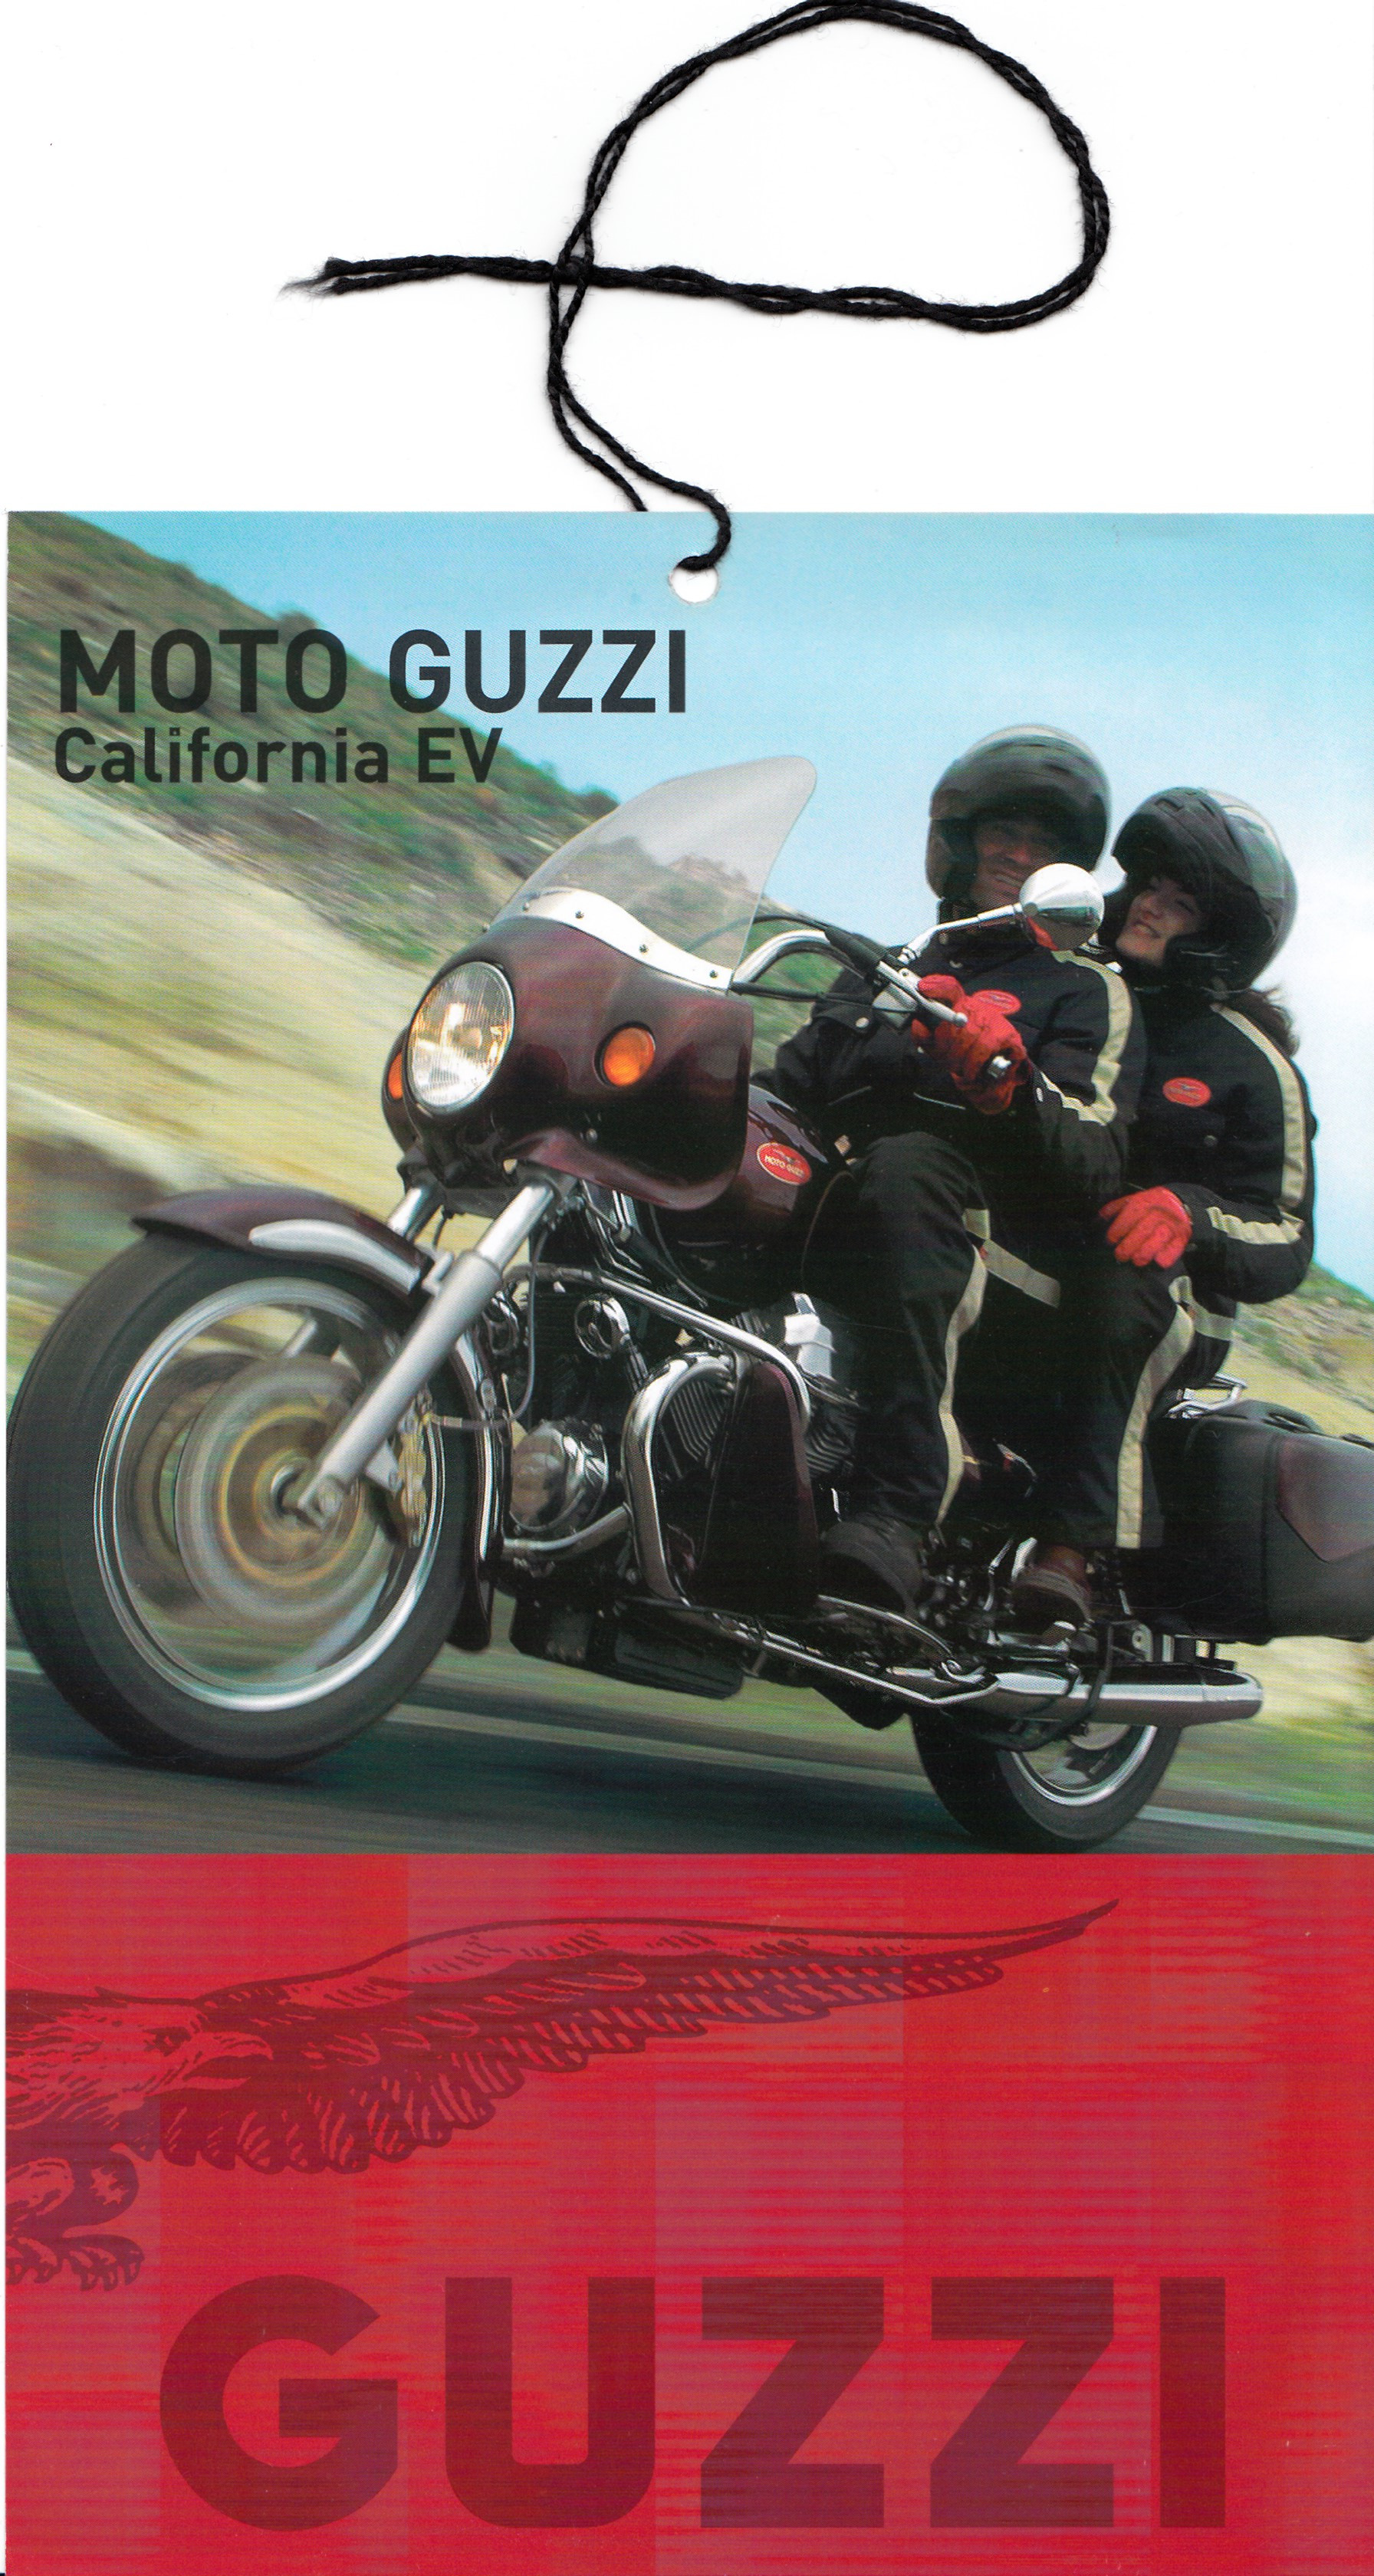 Tag - Moto Guzzi California EV